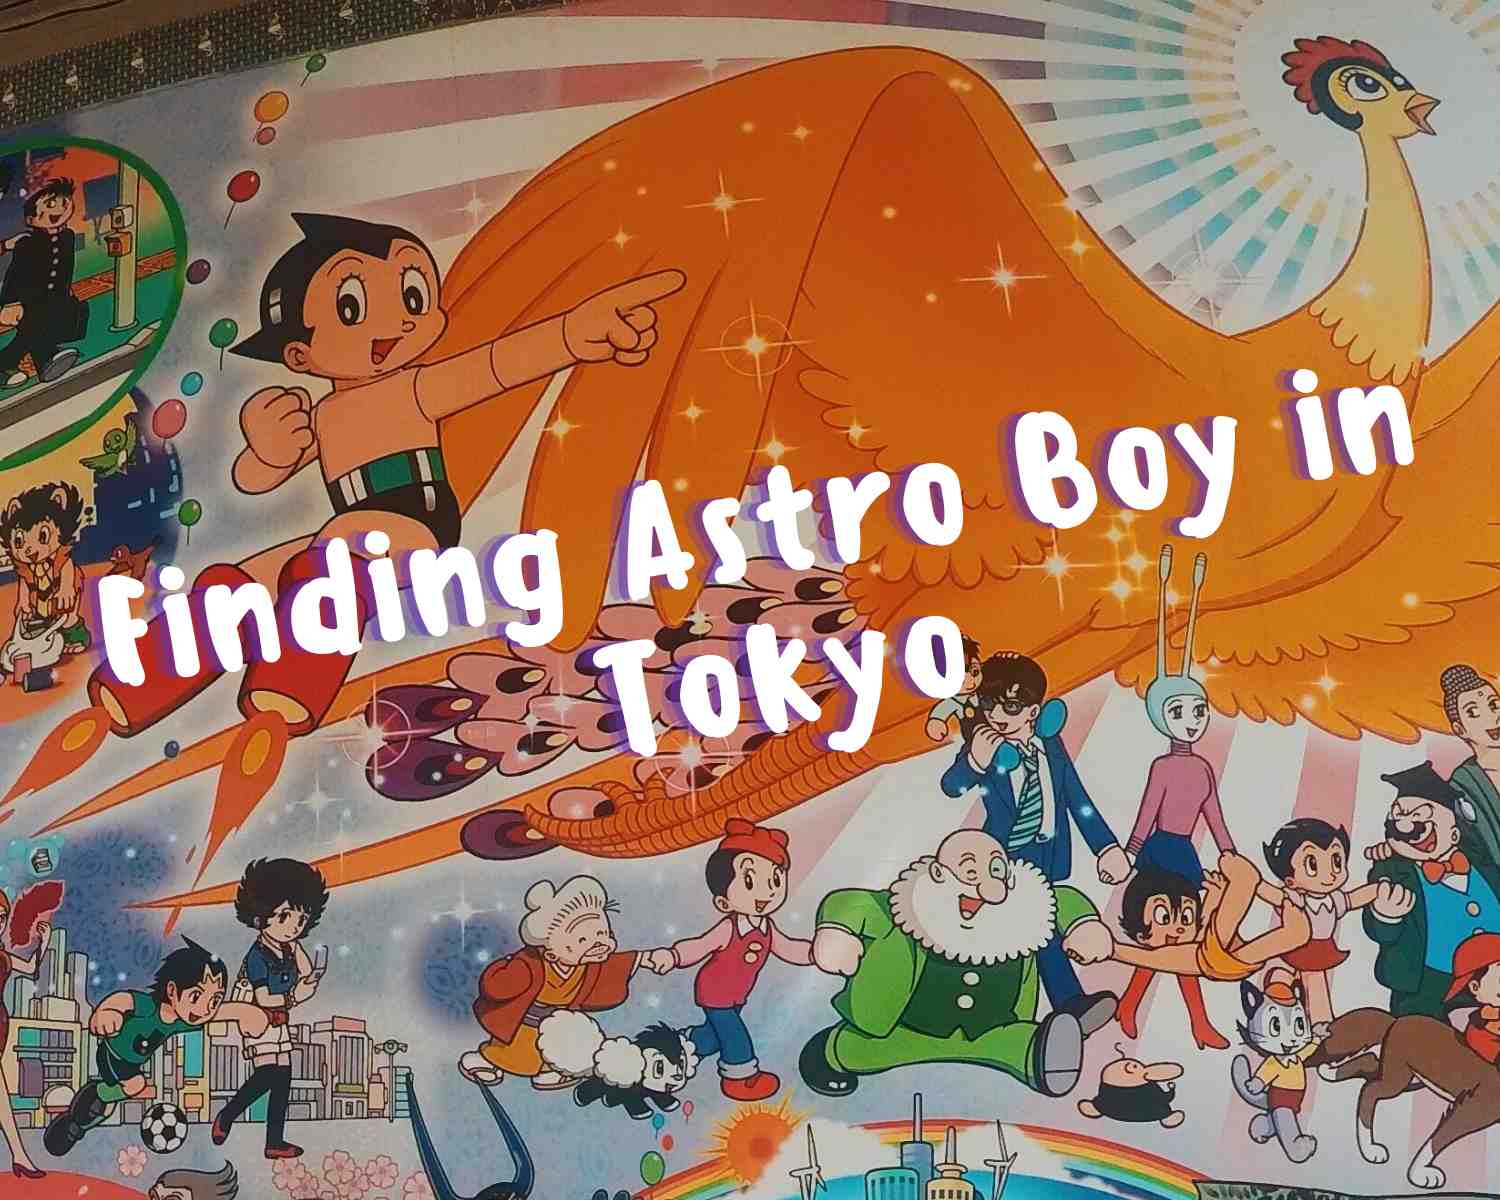 Finding Astro Boy Art in Japan